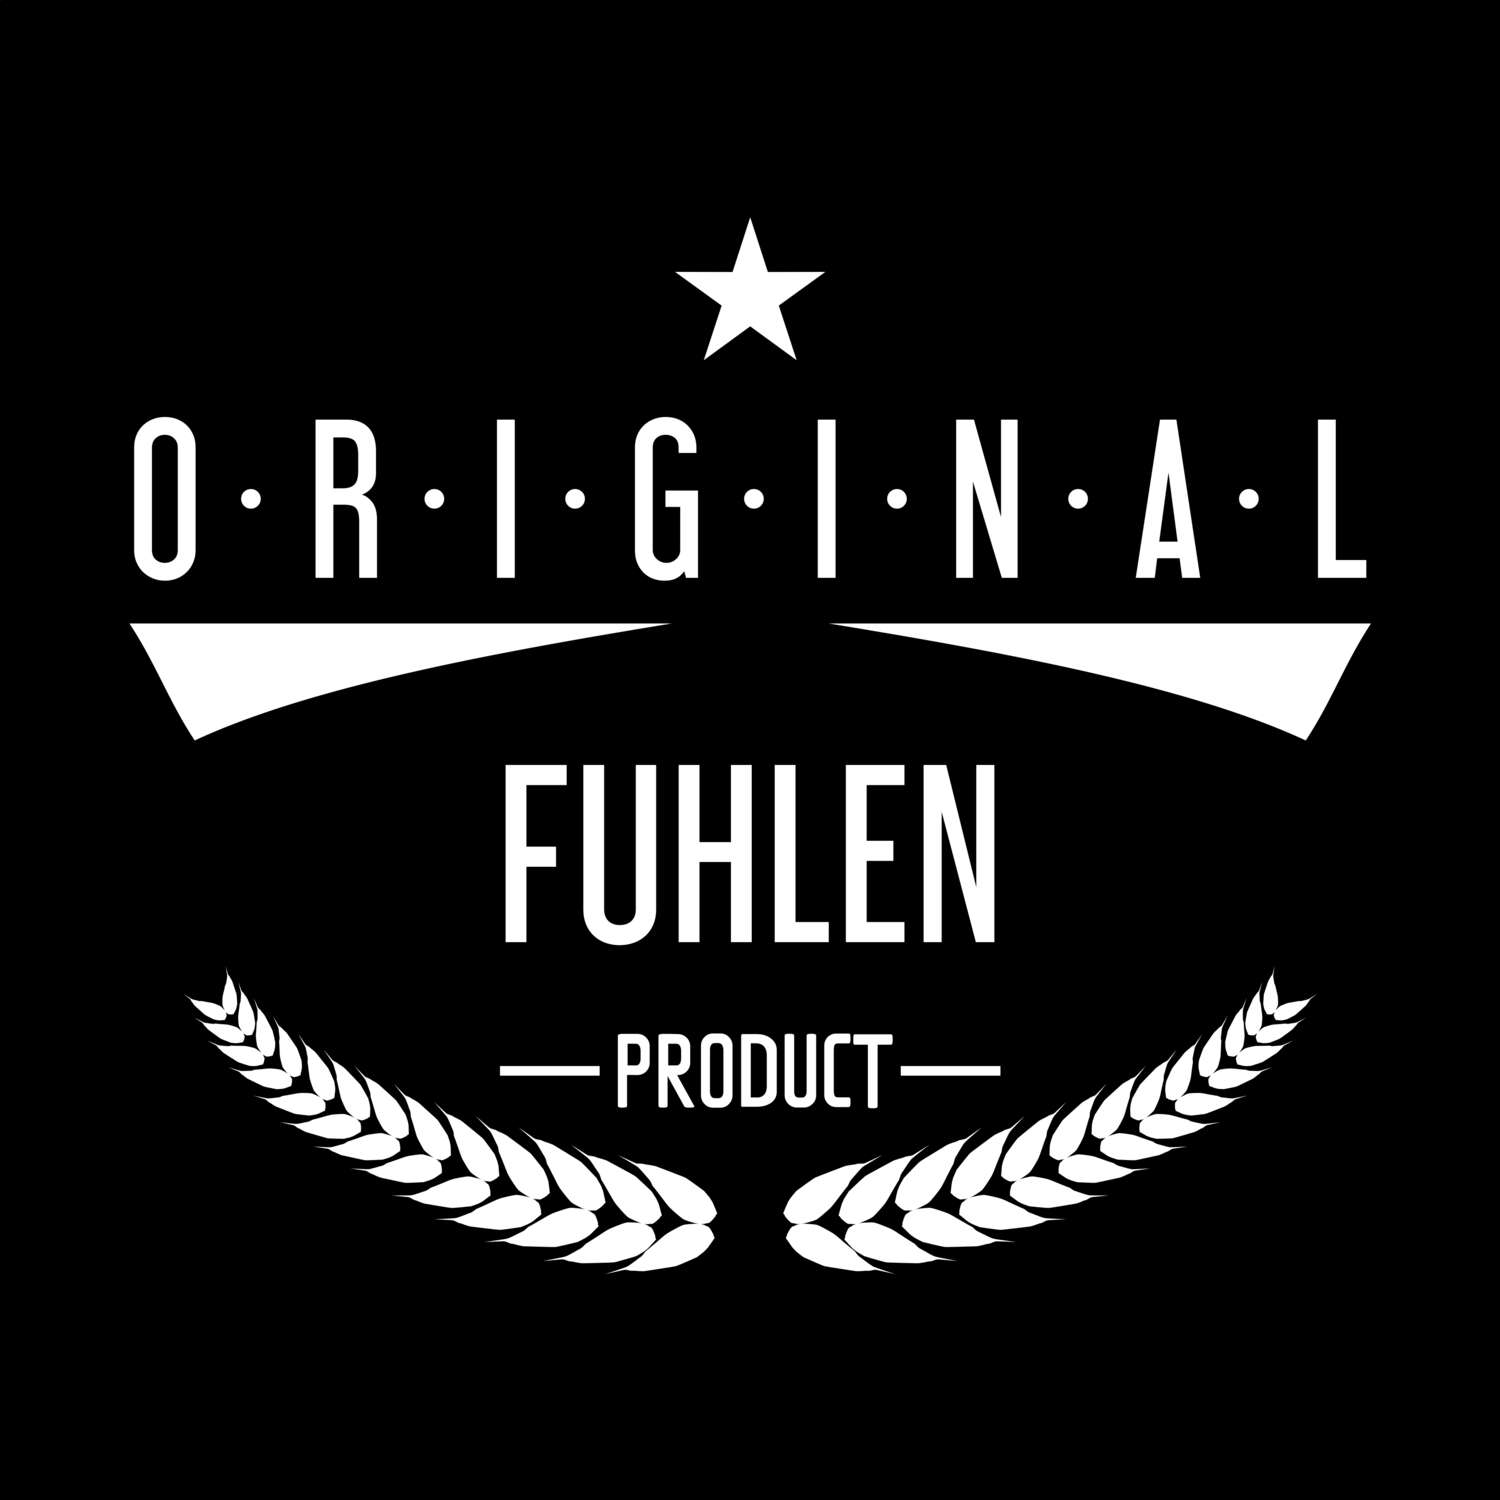 Fuhlen T-Shirt »Original Product«